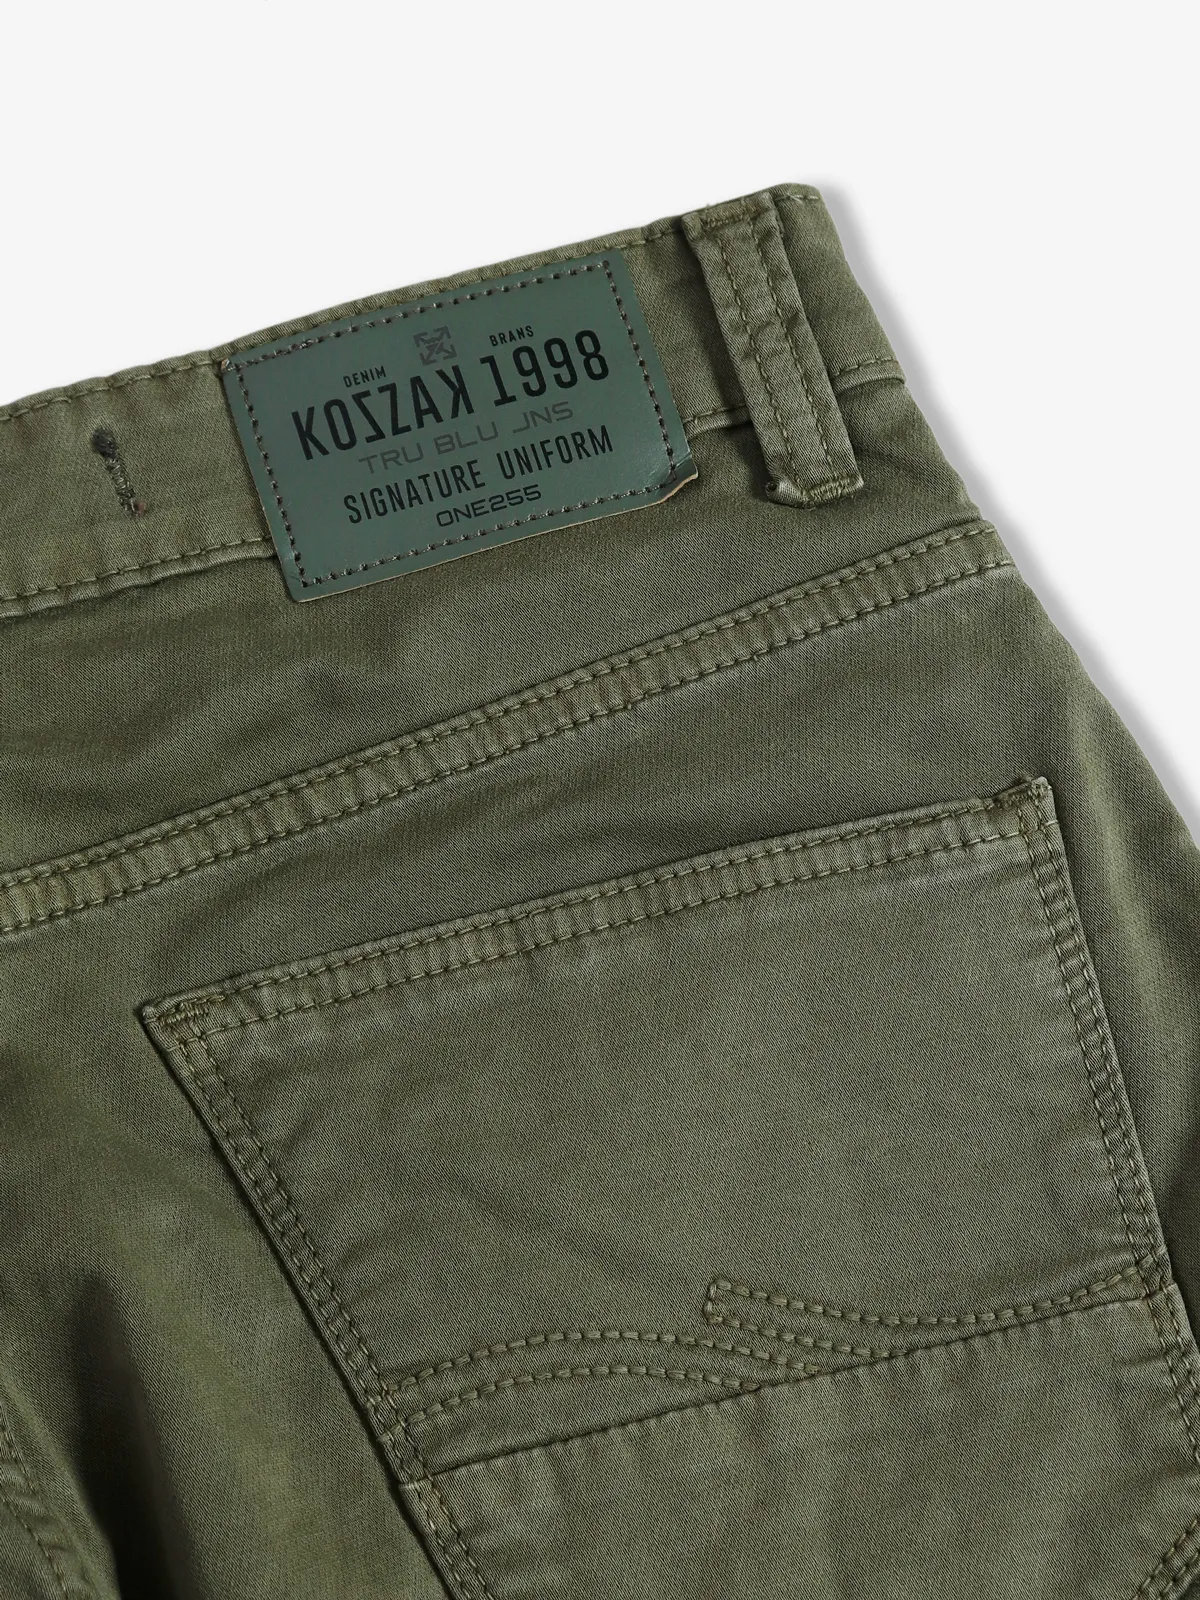 Kozzak olive super skinny fit cargo jeans